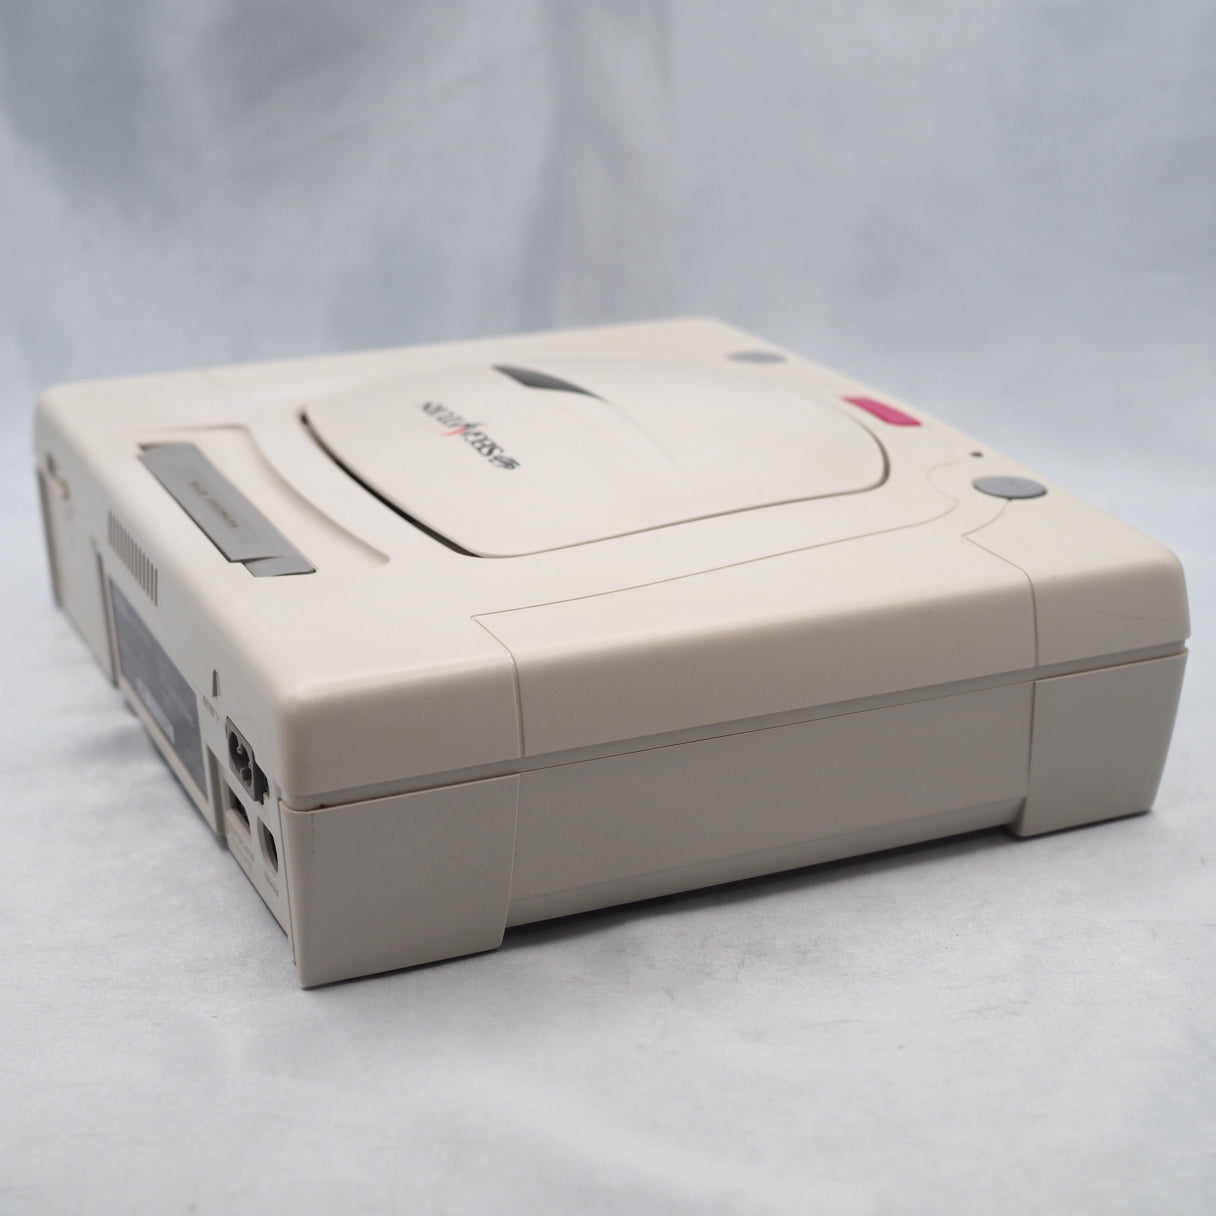 SEGA SATURN Console system HST-3220